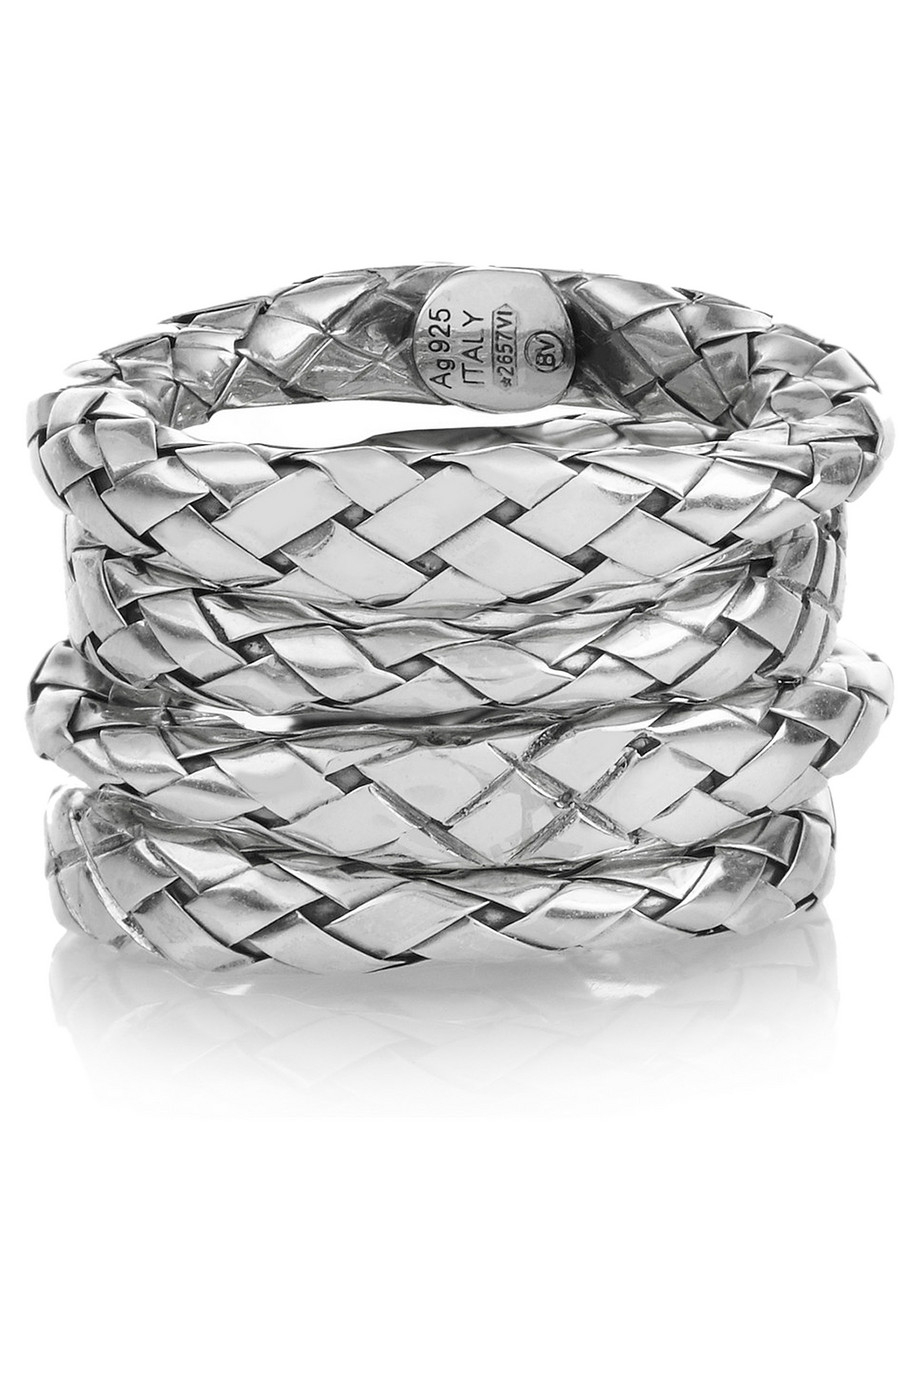 Bottega Veneta Set Of Four Intrecciato Sterling Silver Rings in Metallic |  Lyst